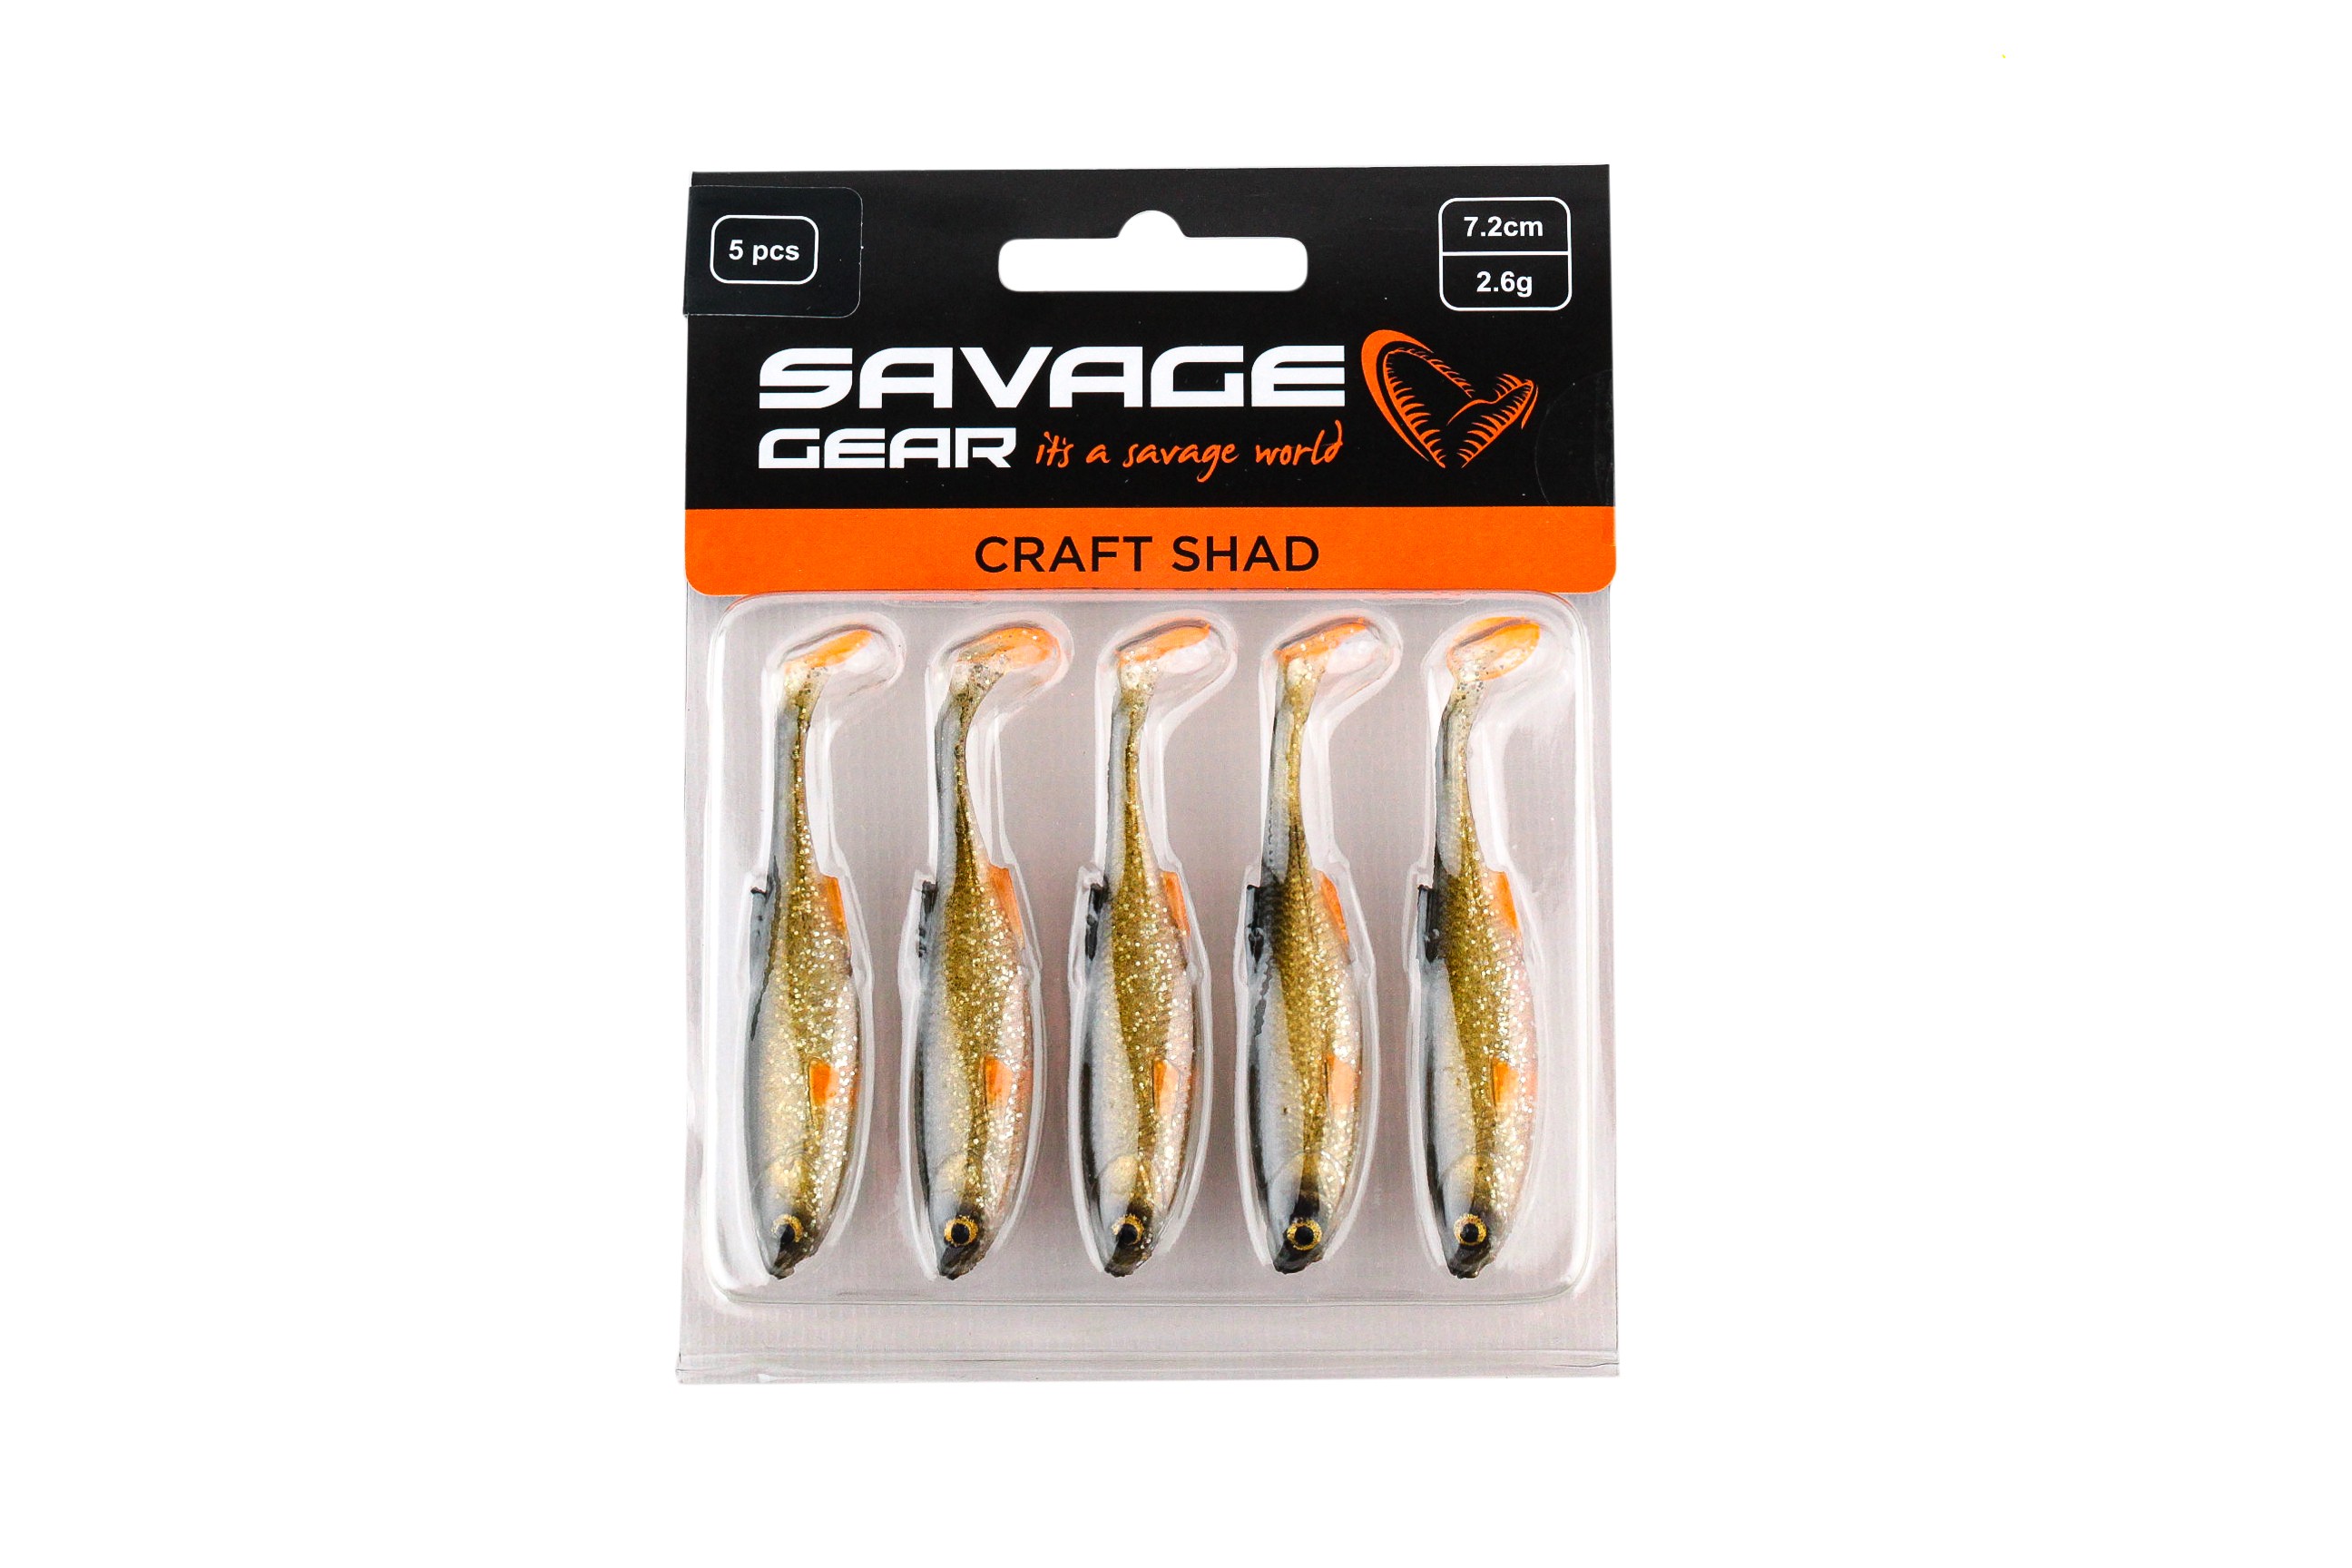 Приманка Savage Gear Craft shad 7,2см 2,6гр green silver уп.5шт - фото 1